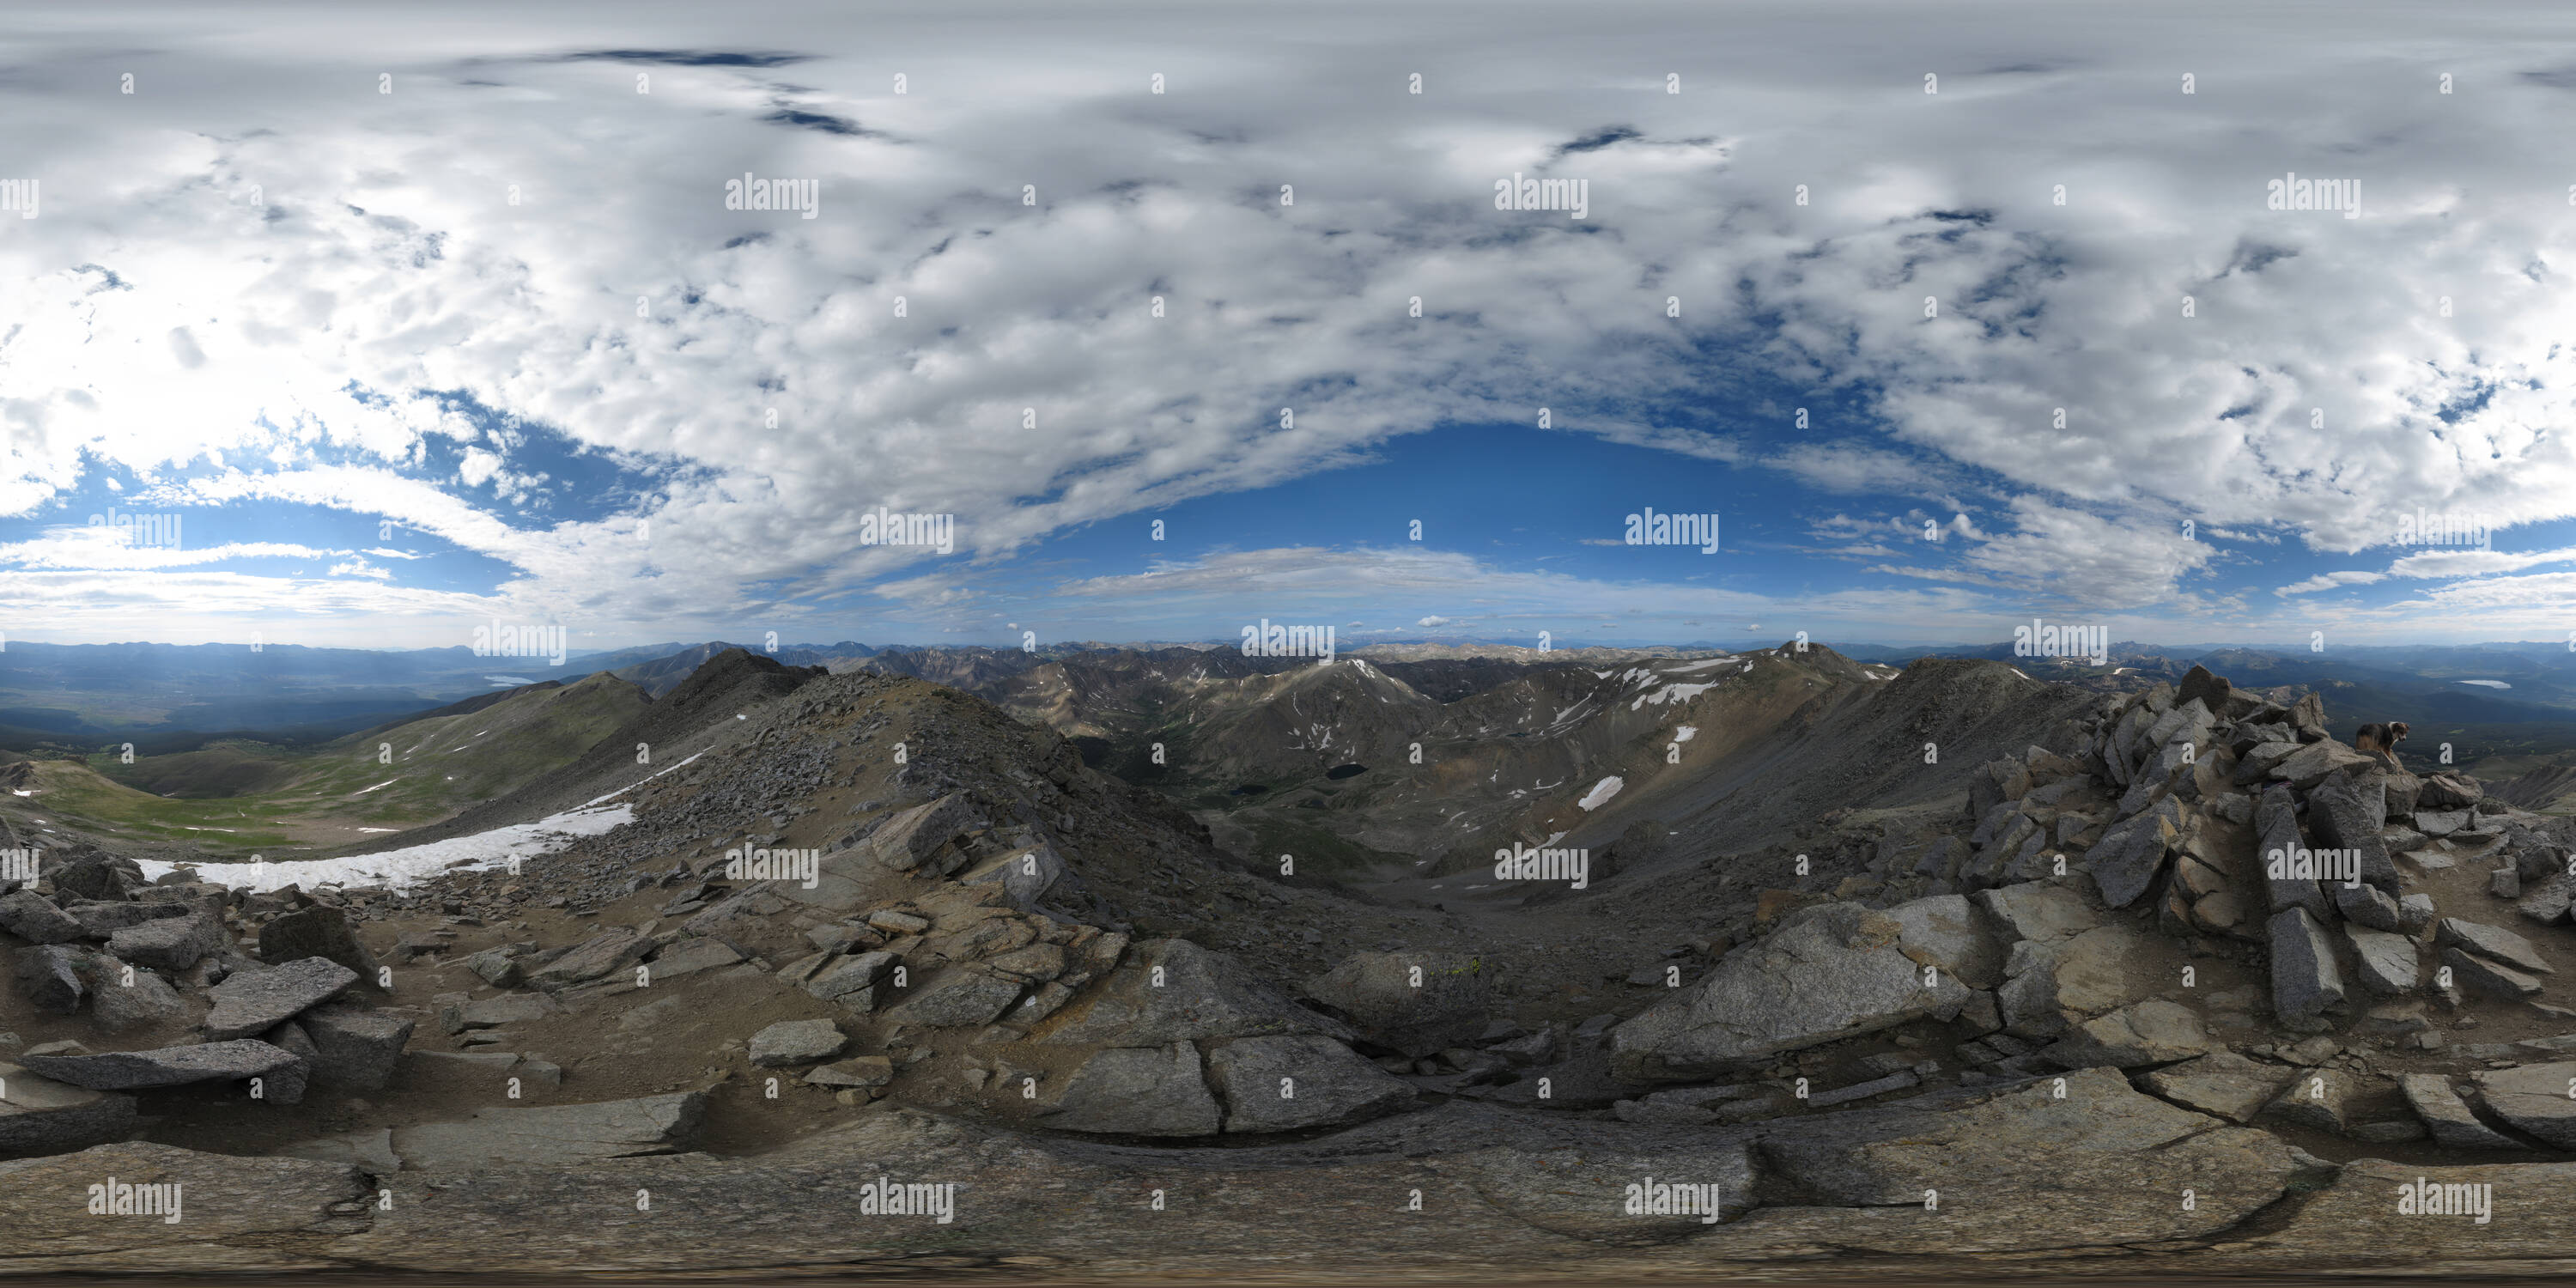 360 degree panoramic view of Mt. Massive (14421'/4396m) summit (gigapixel)